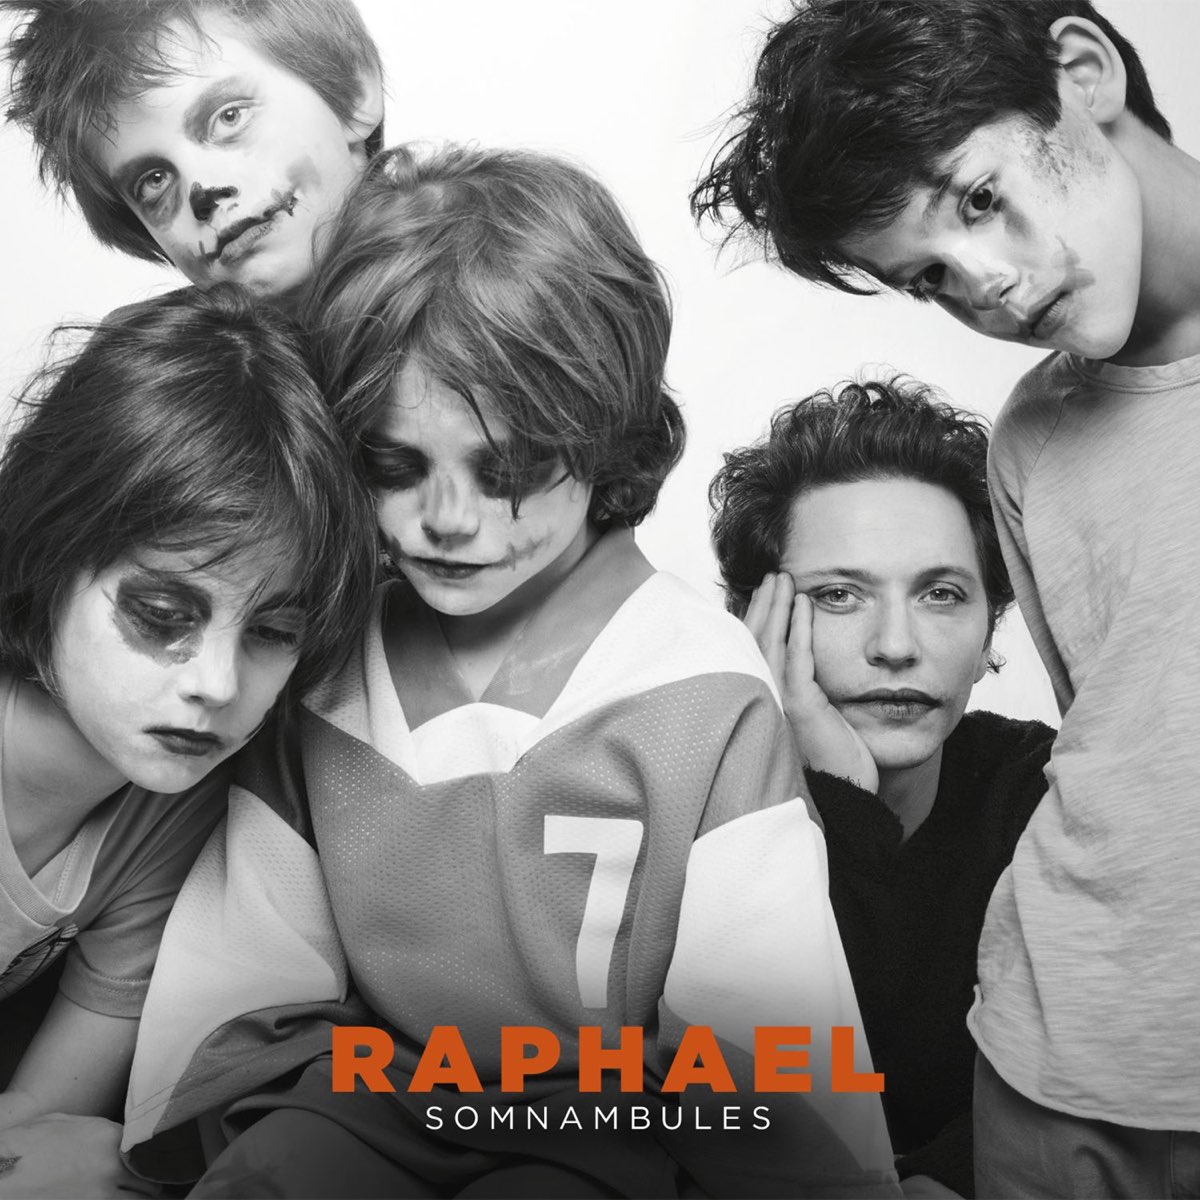 Raphael "Somnambules". Raphael albums. Raphael группа слушать. Группа Raphael ВКОНТАКТЕ.